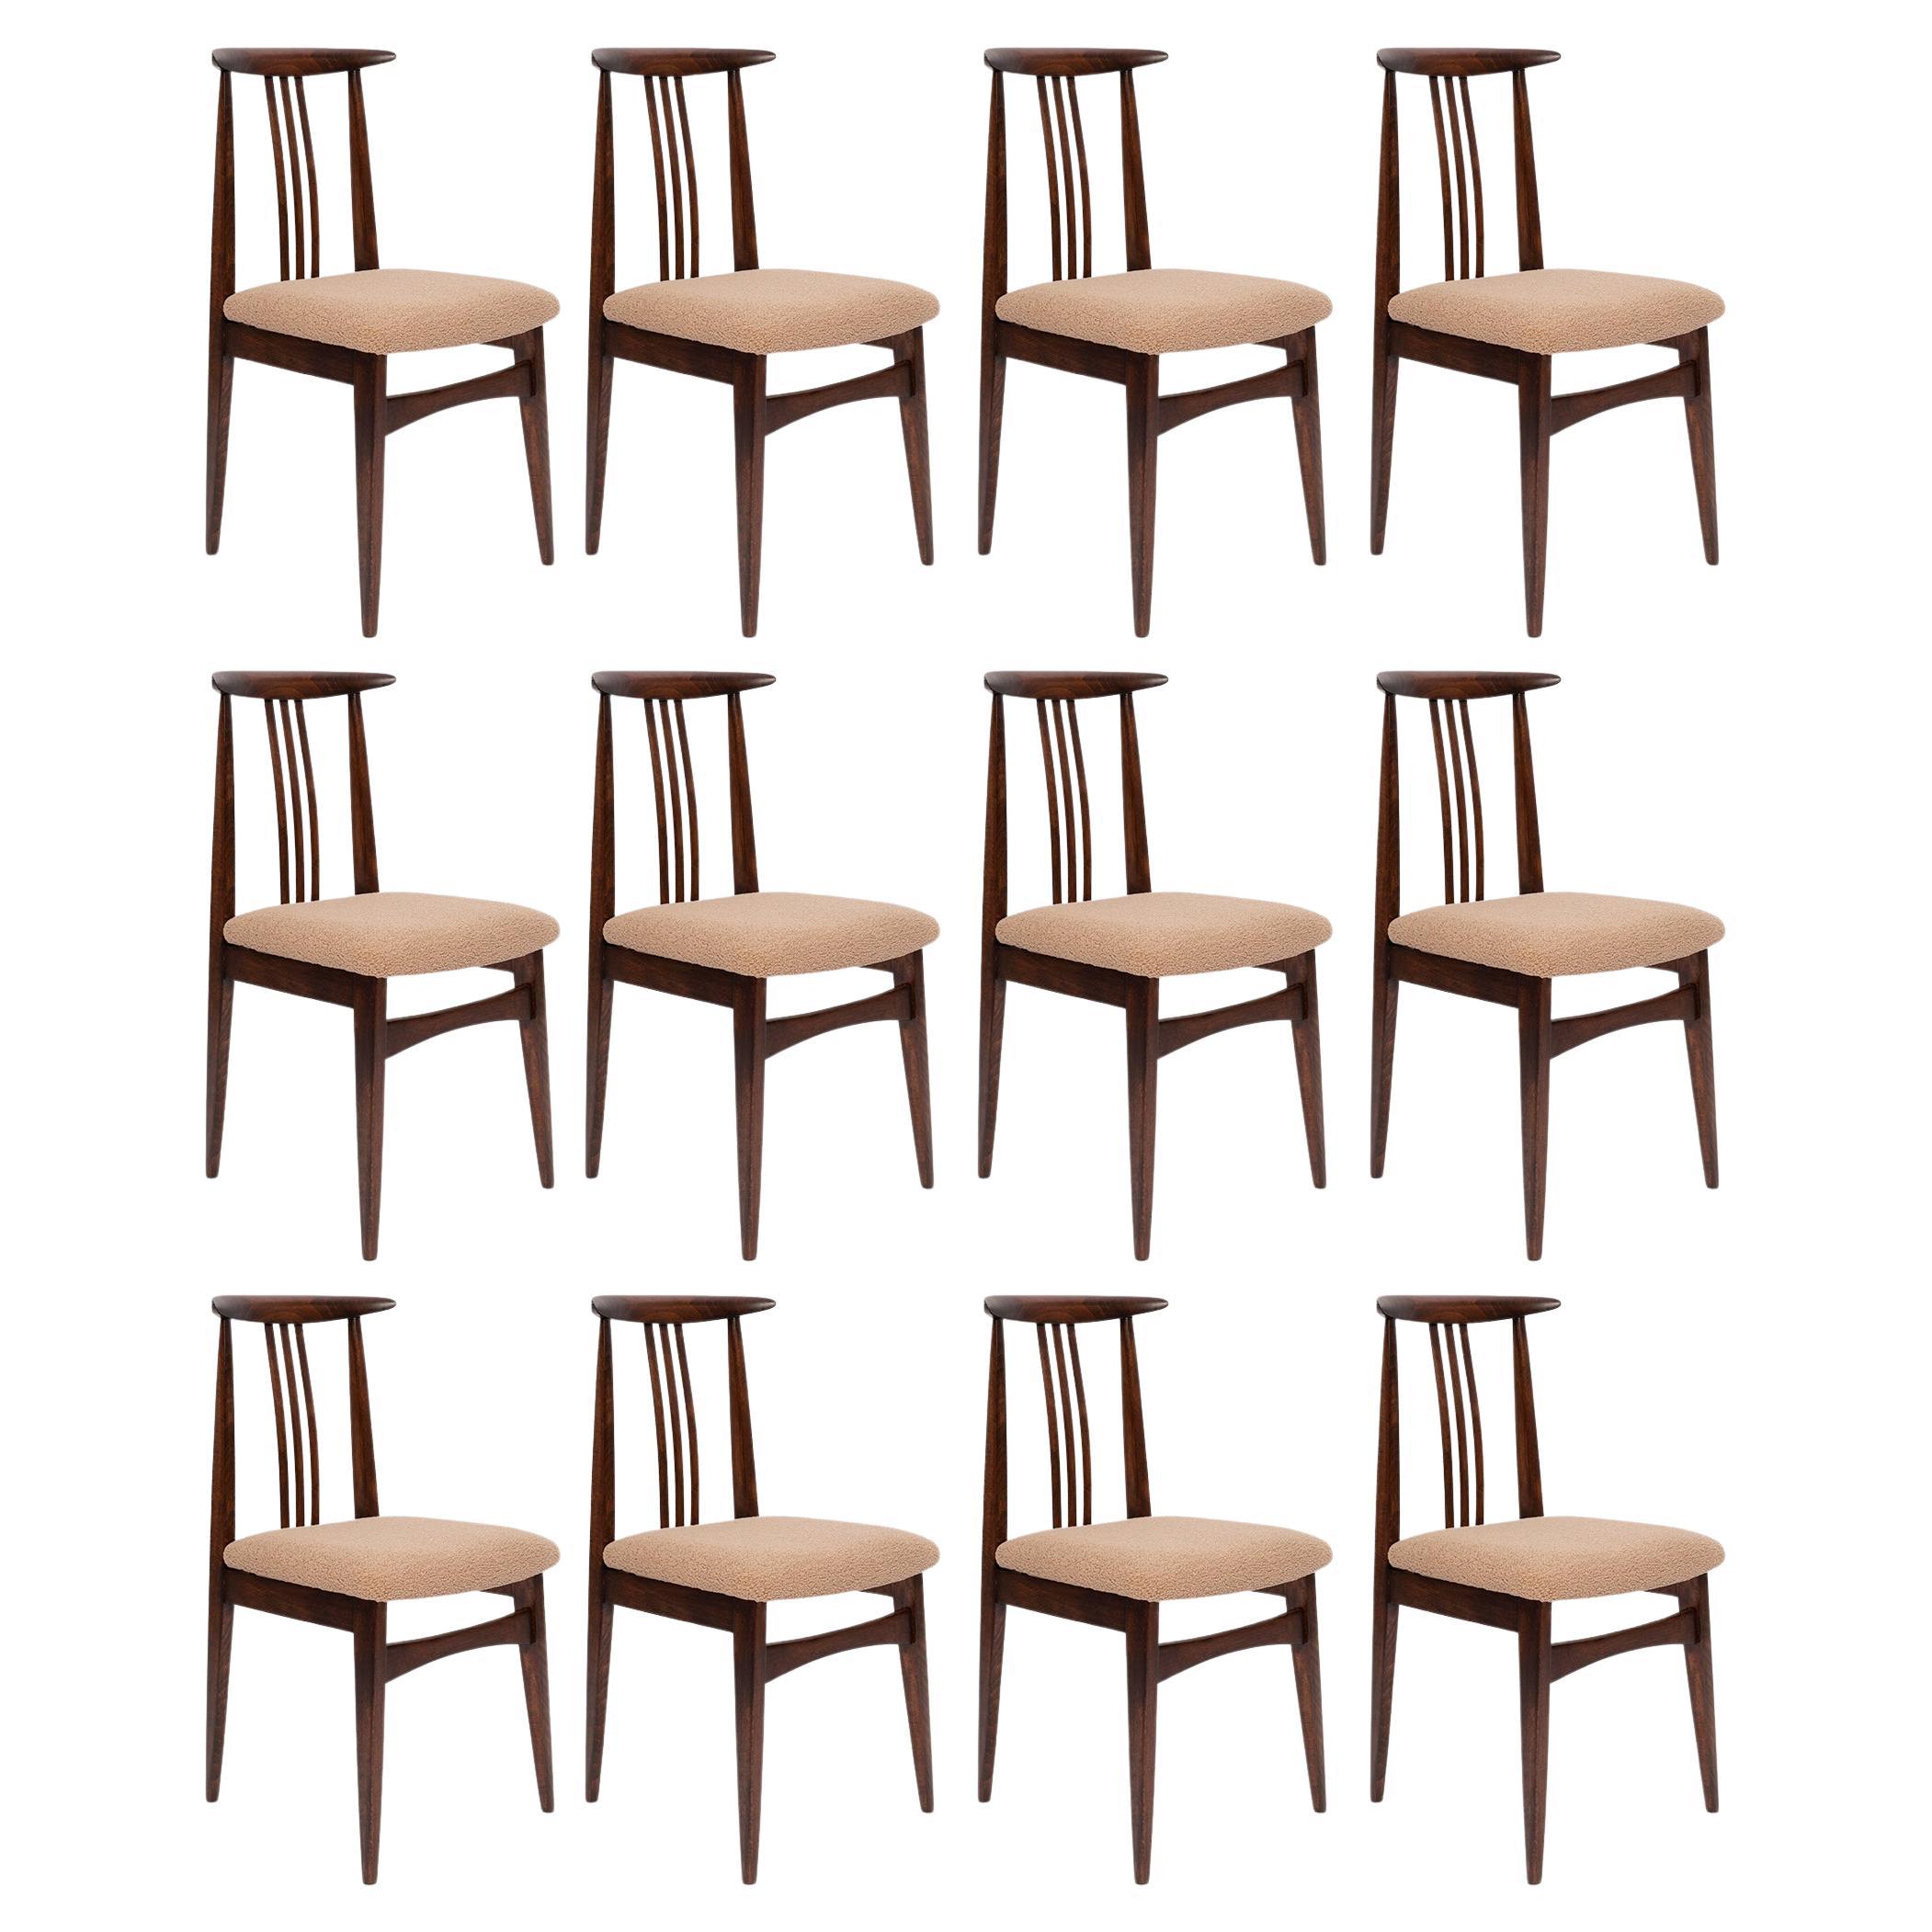 Twelve Mid-Century Latte Boucle Chairs, Walnut Wood, M. Zielinski, Europe 1960s For Sale